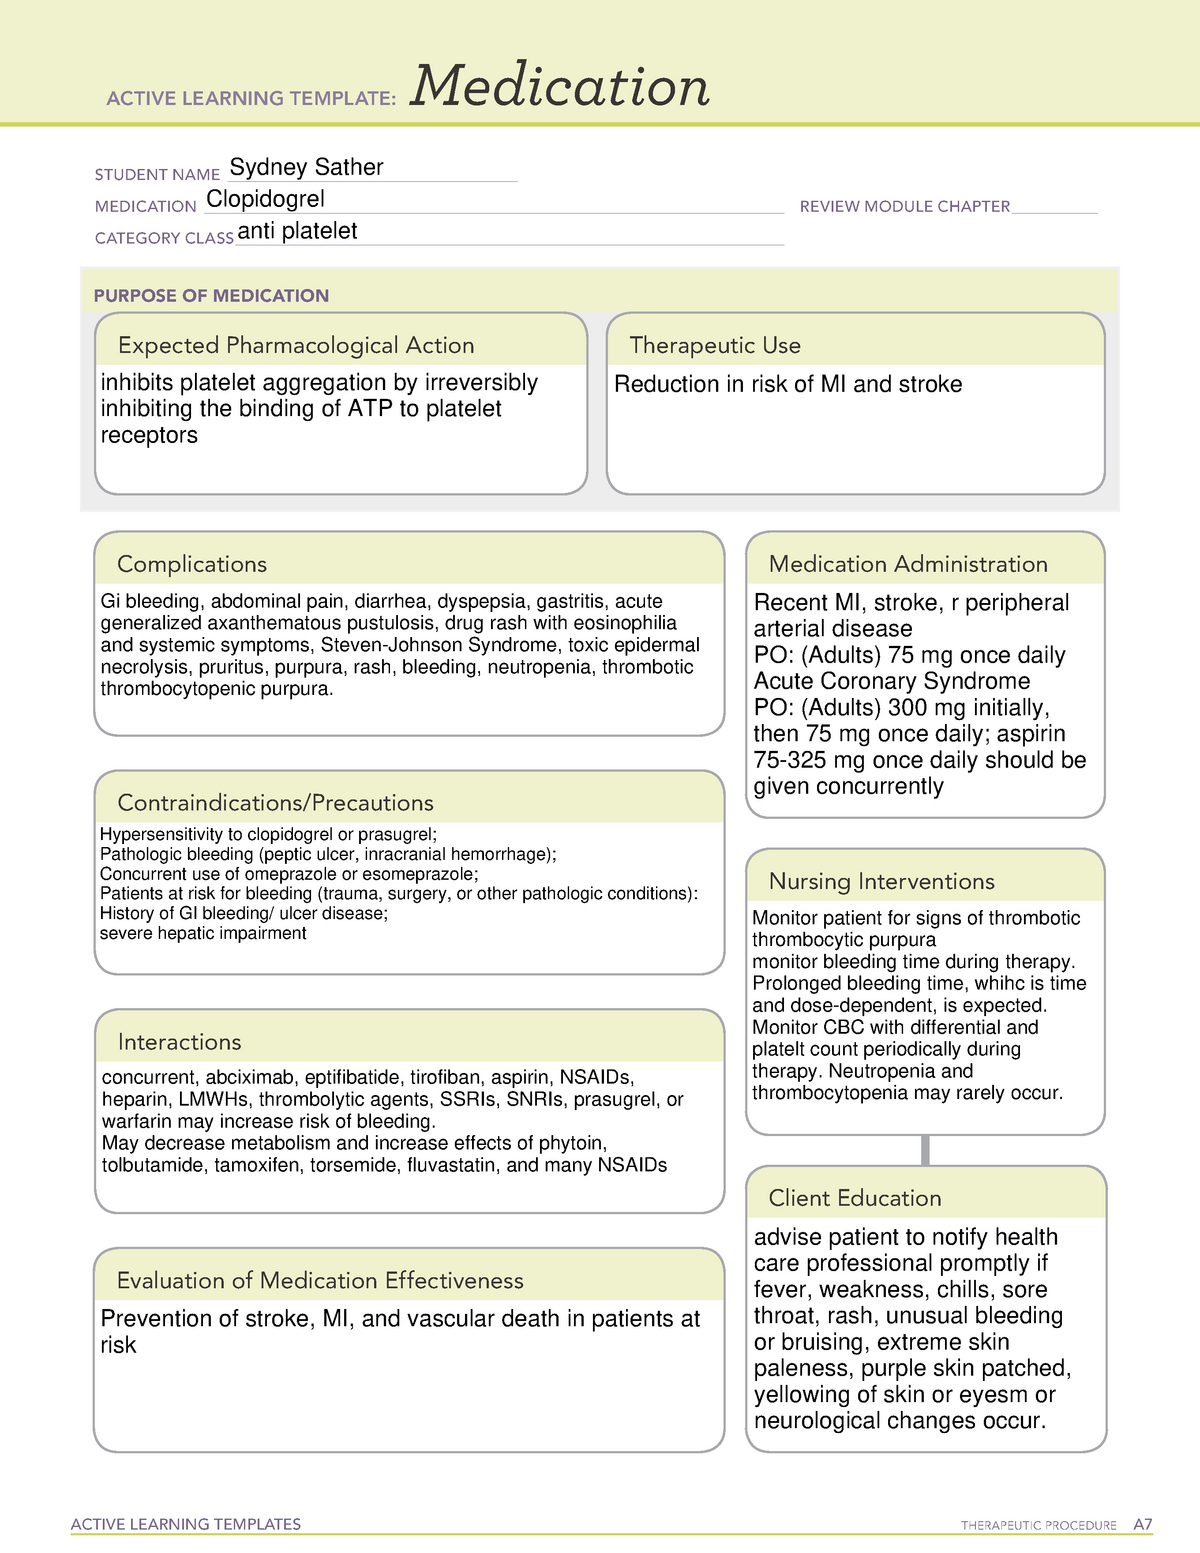 clopidogrel-plavix-pdf-active-learning-templates-therapeutic